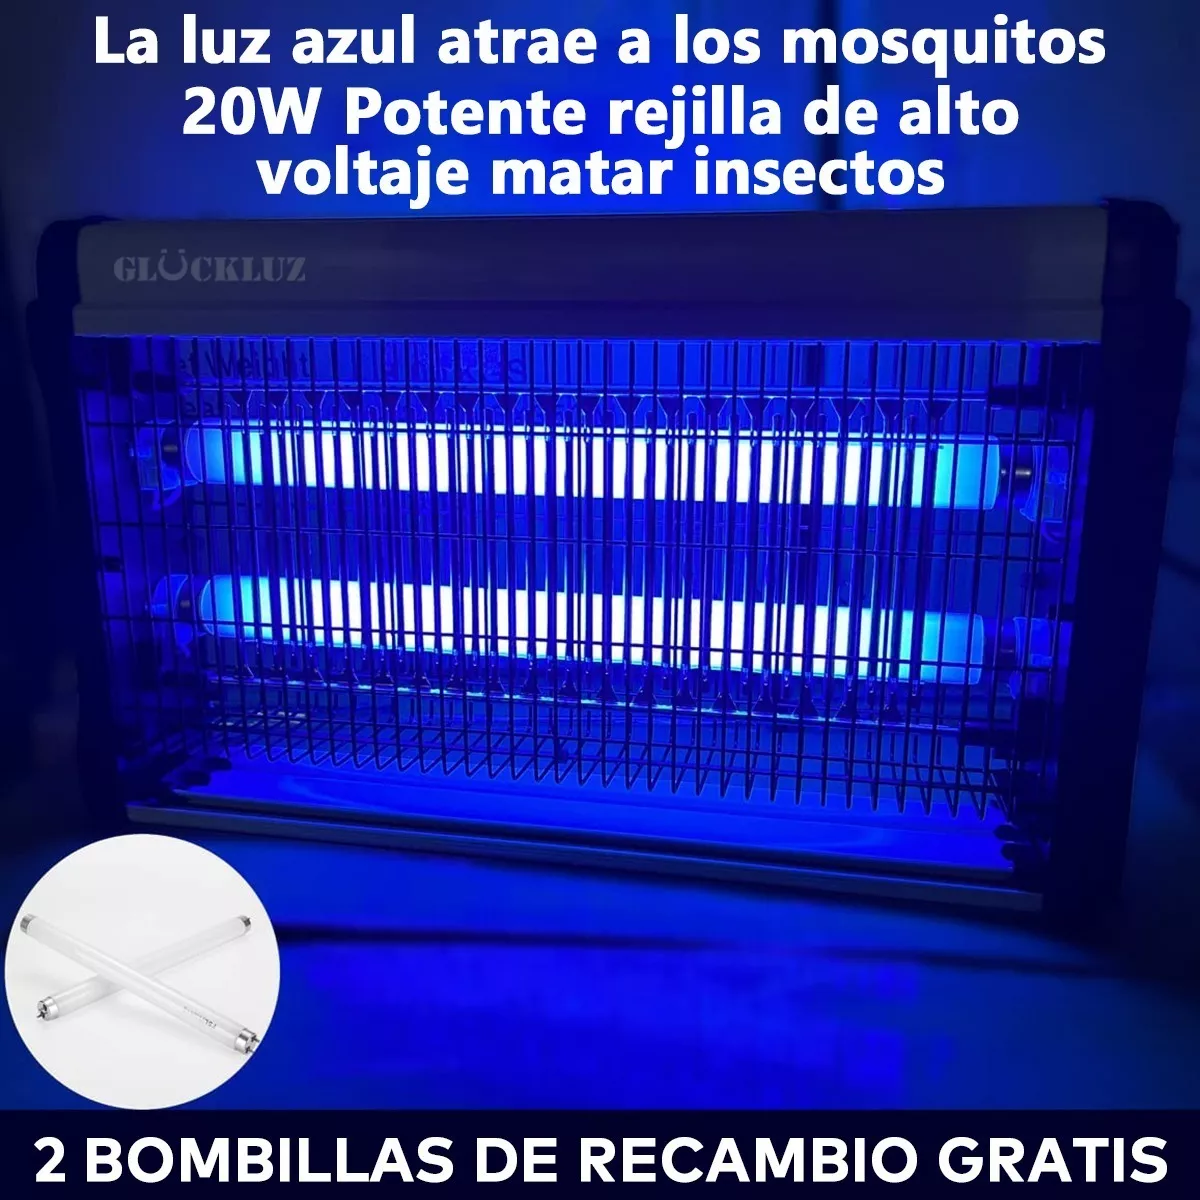 Matamoscas Electrico, Rejilla De 2800v Mosquitos & Insectos